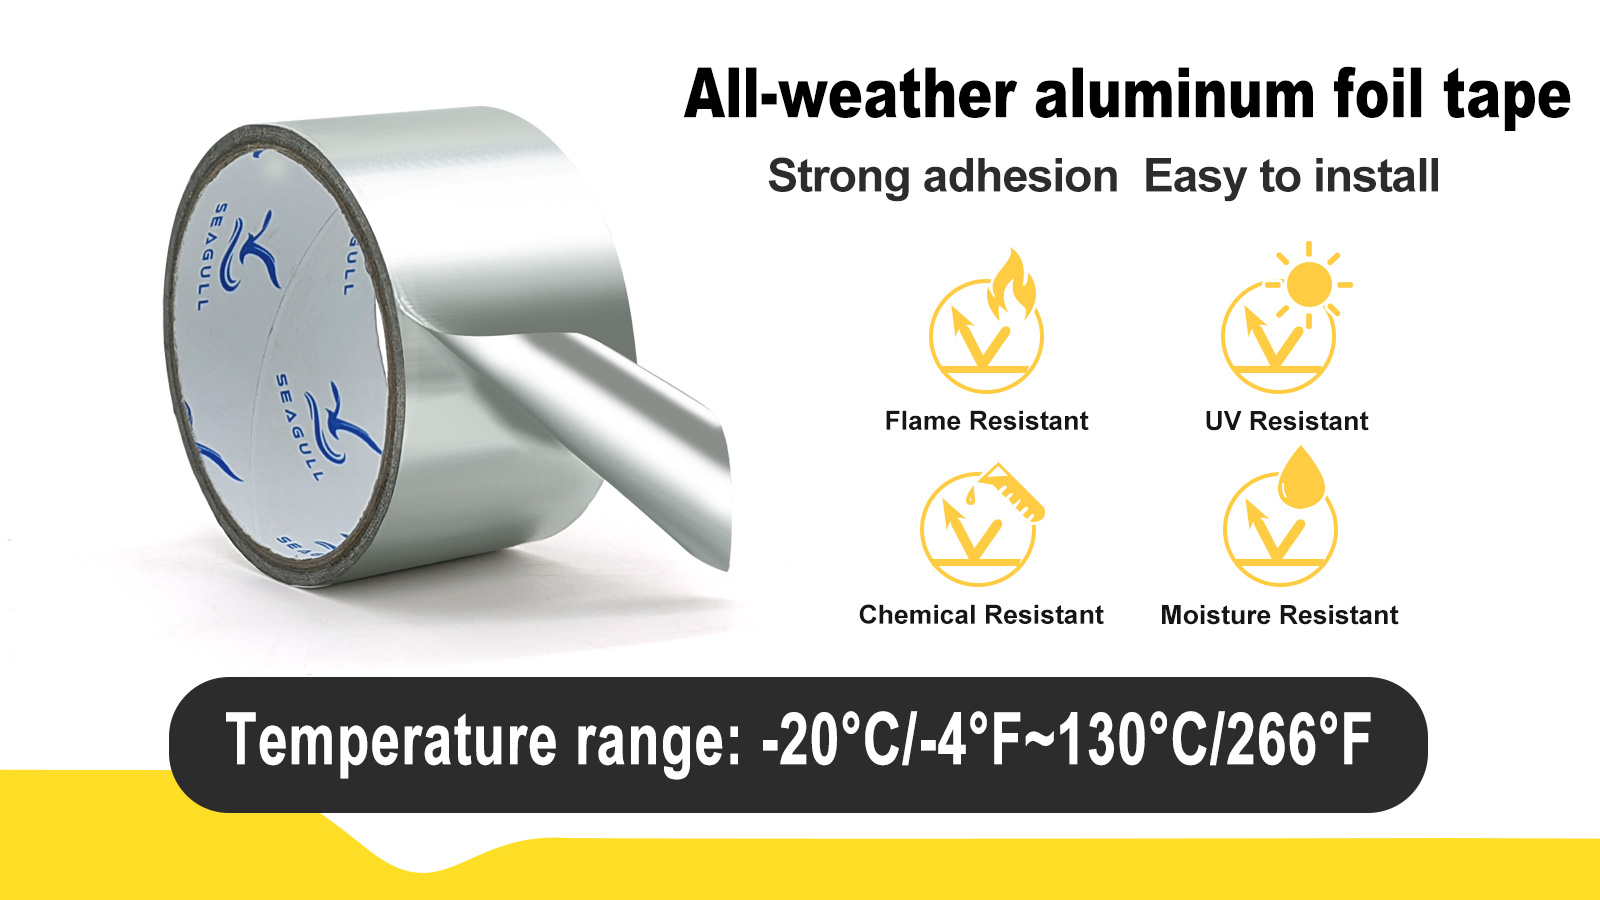 All-weather aluminum foil tape